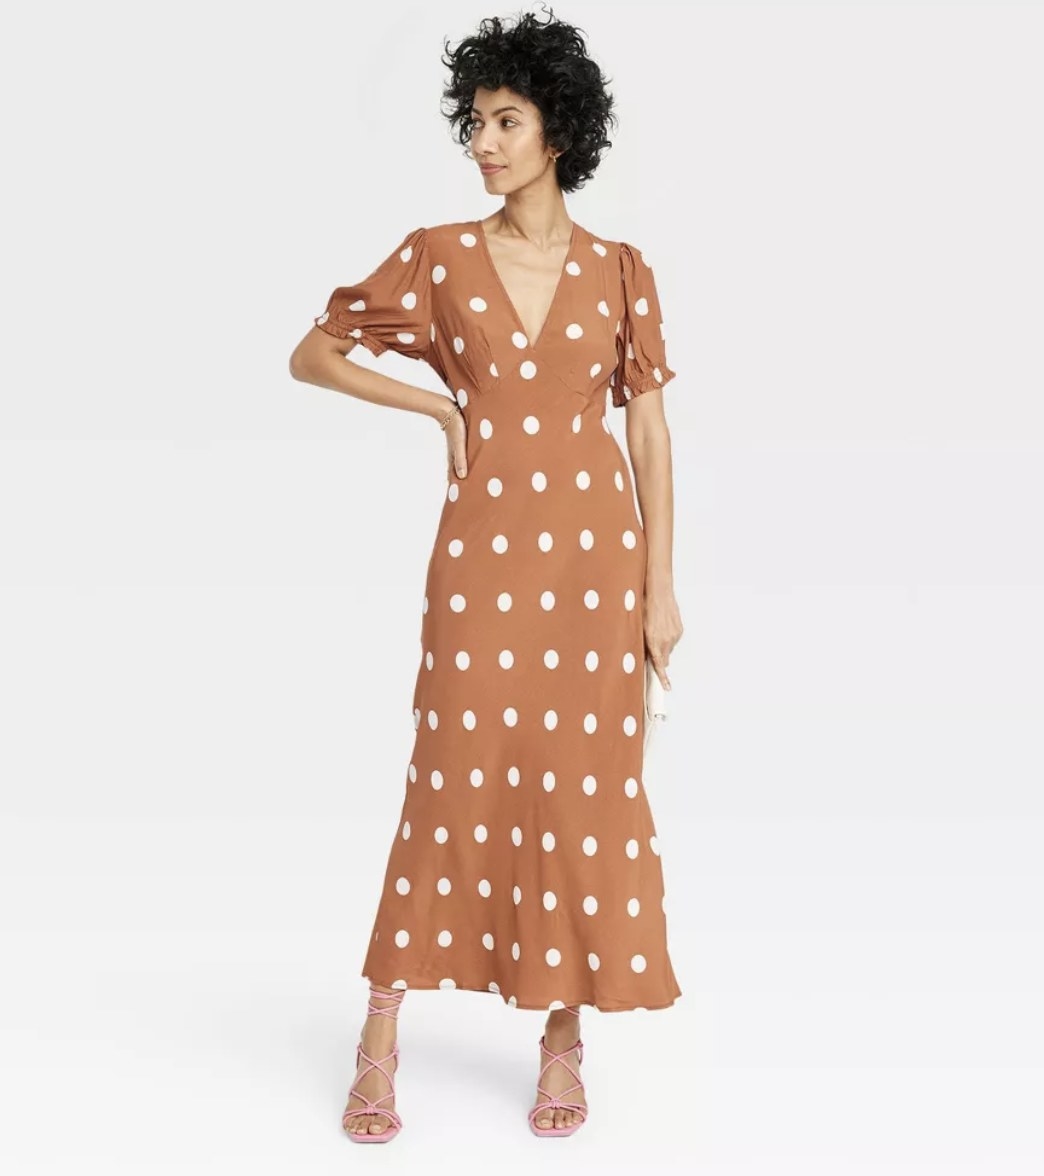 A brown polka dot maxi dress